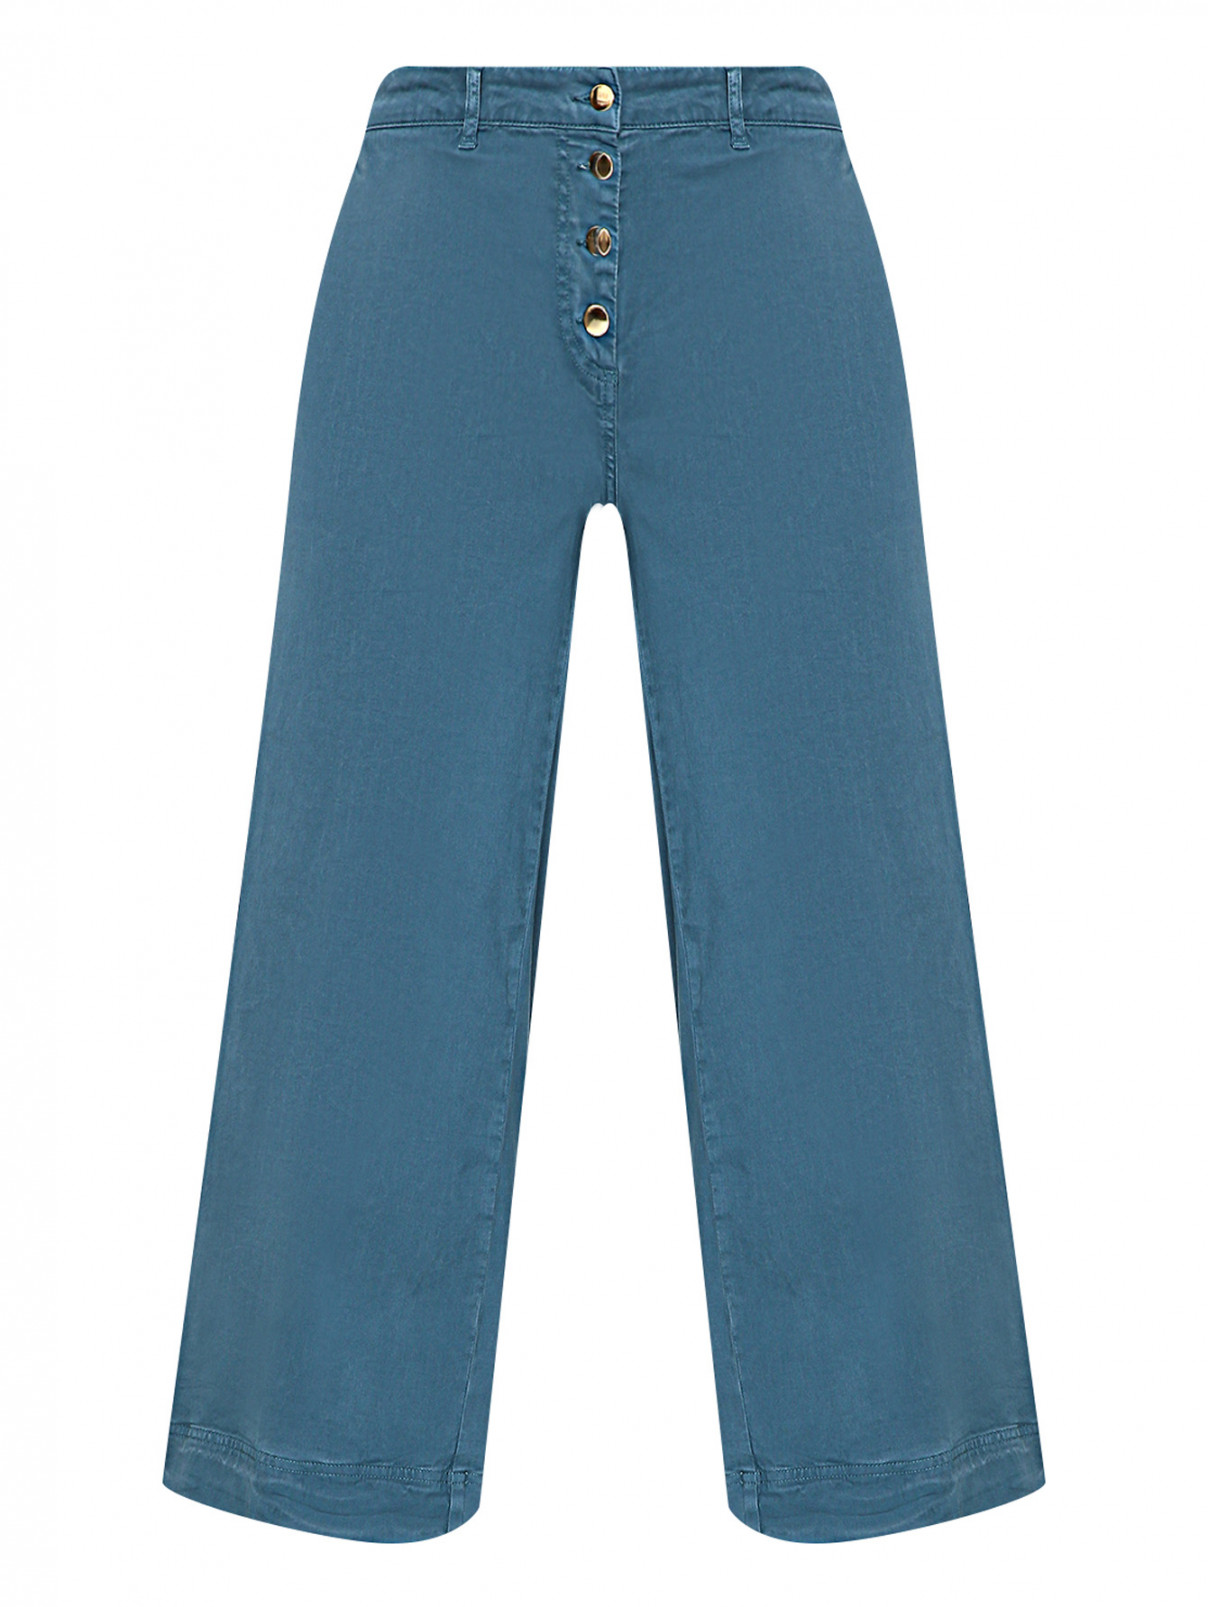 Широкие брюки с карманами Persona by Marina Rinaldi  –  Общий вид  – Цвет:  Синий